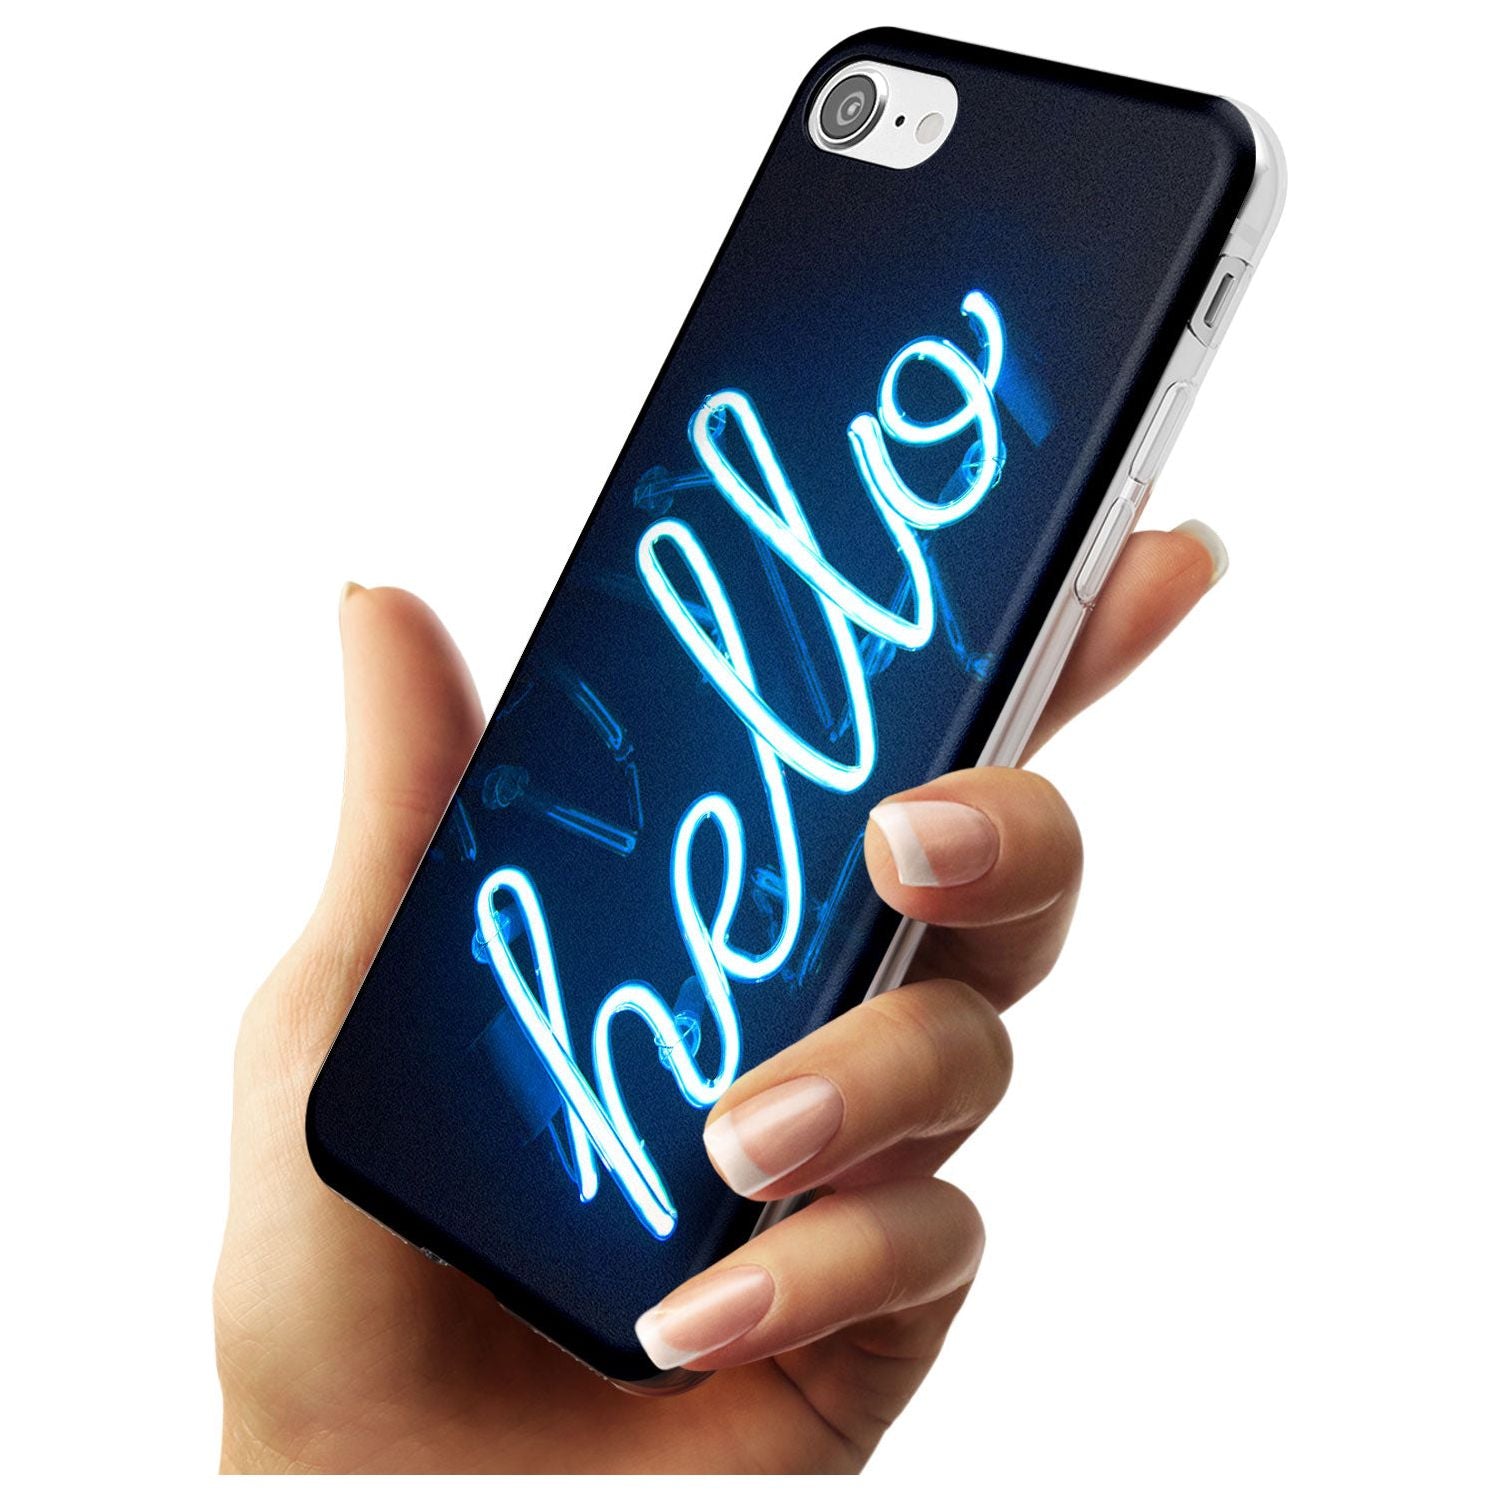 "Hello" Blue Cursive Neon Sign Slim TPU Phone Case for iPhone SE 8 7 Plus